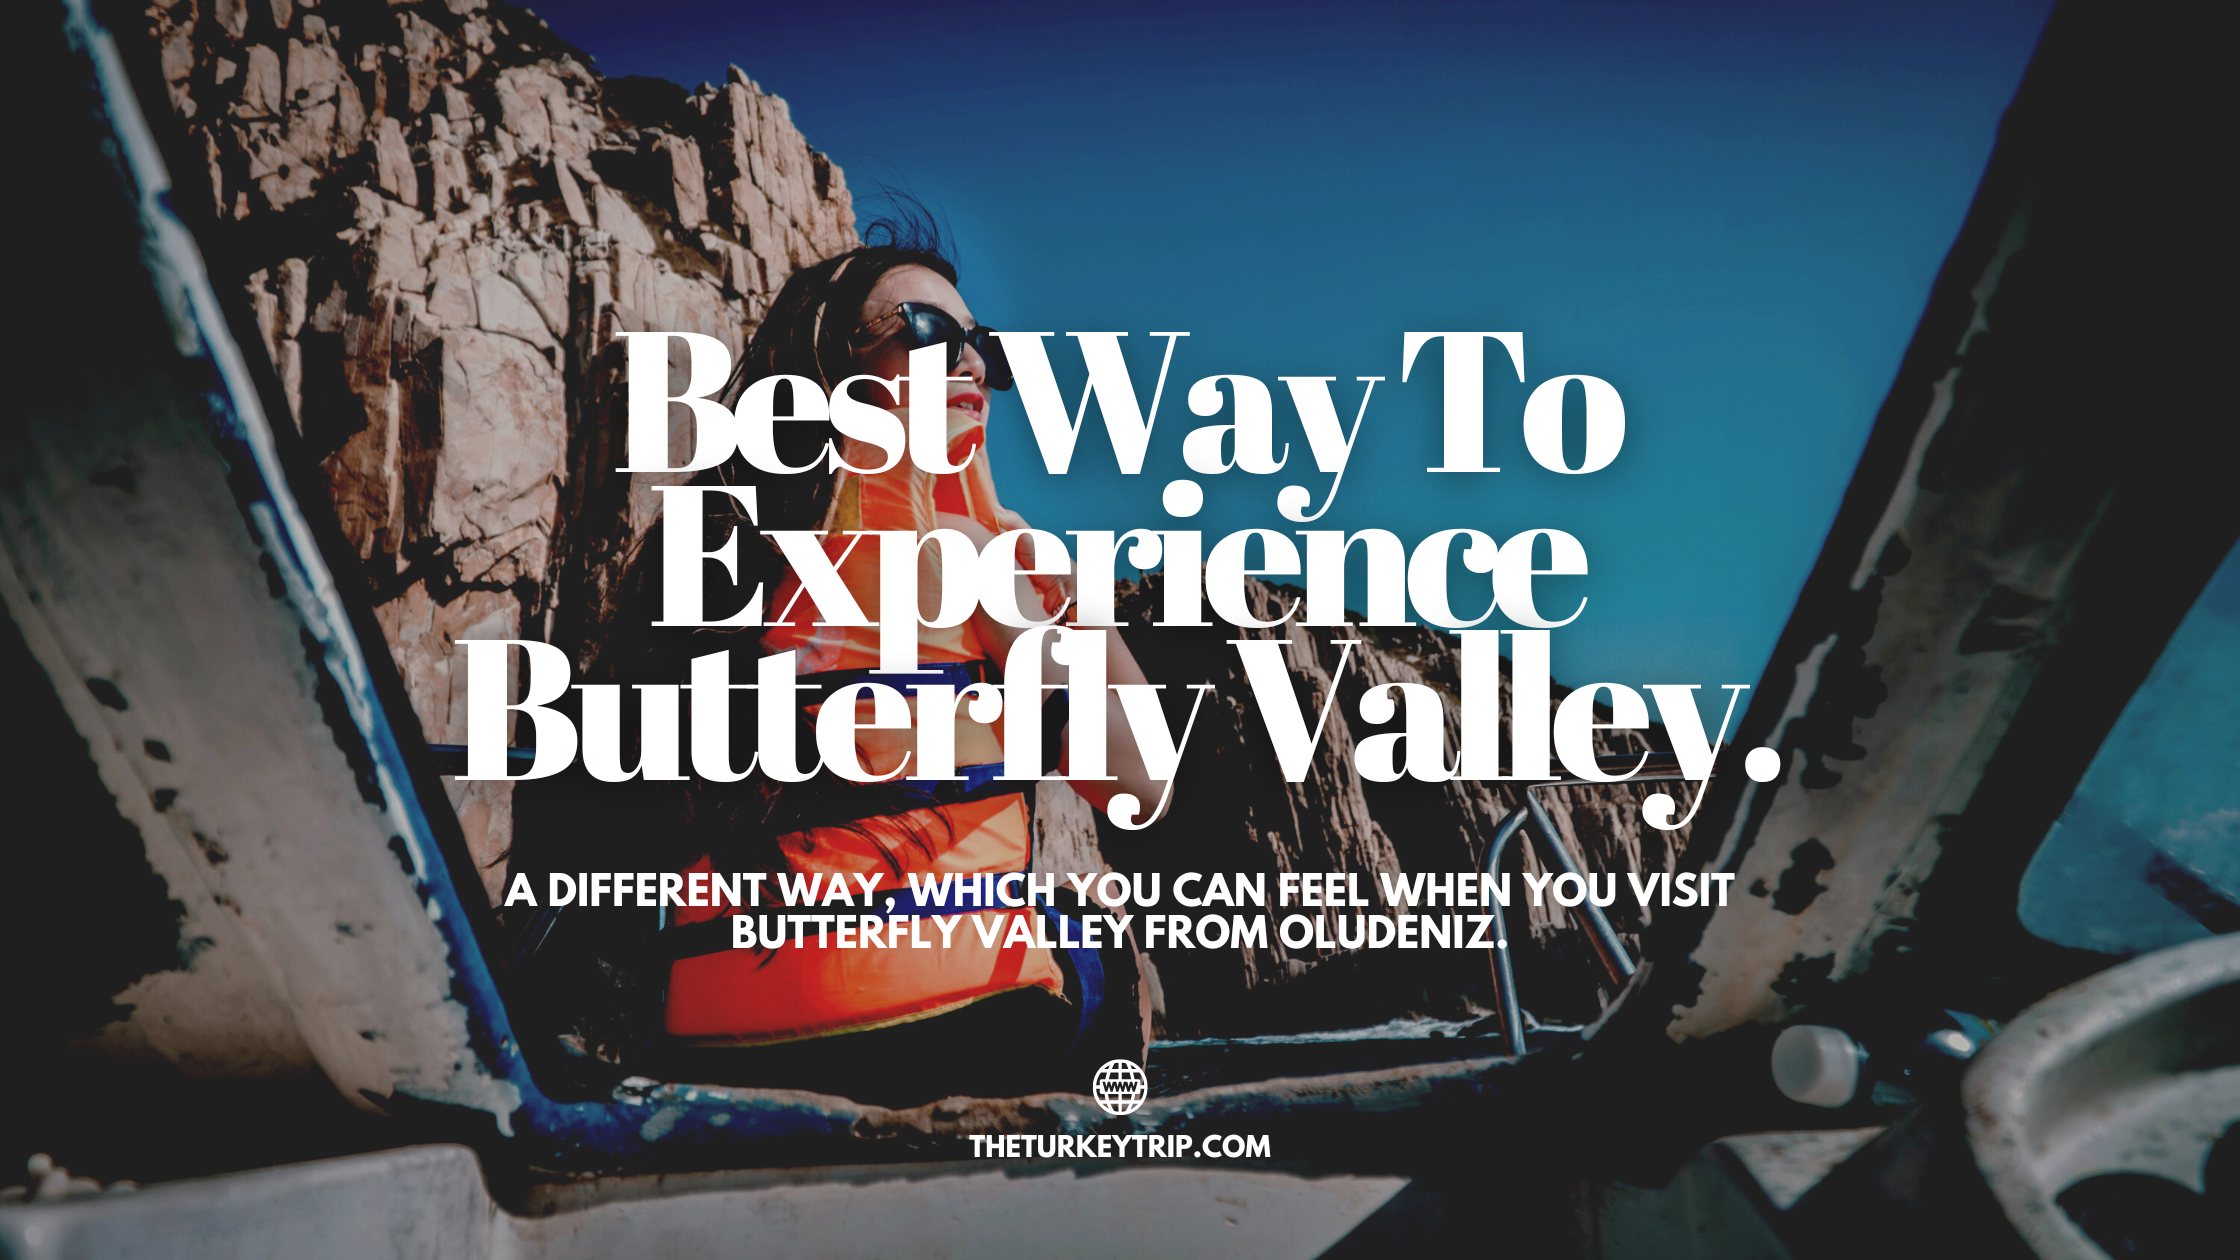 boat trips to butterfly valley from oludeniz blue lagoon in fethiye turkey